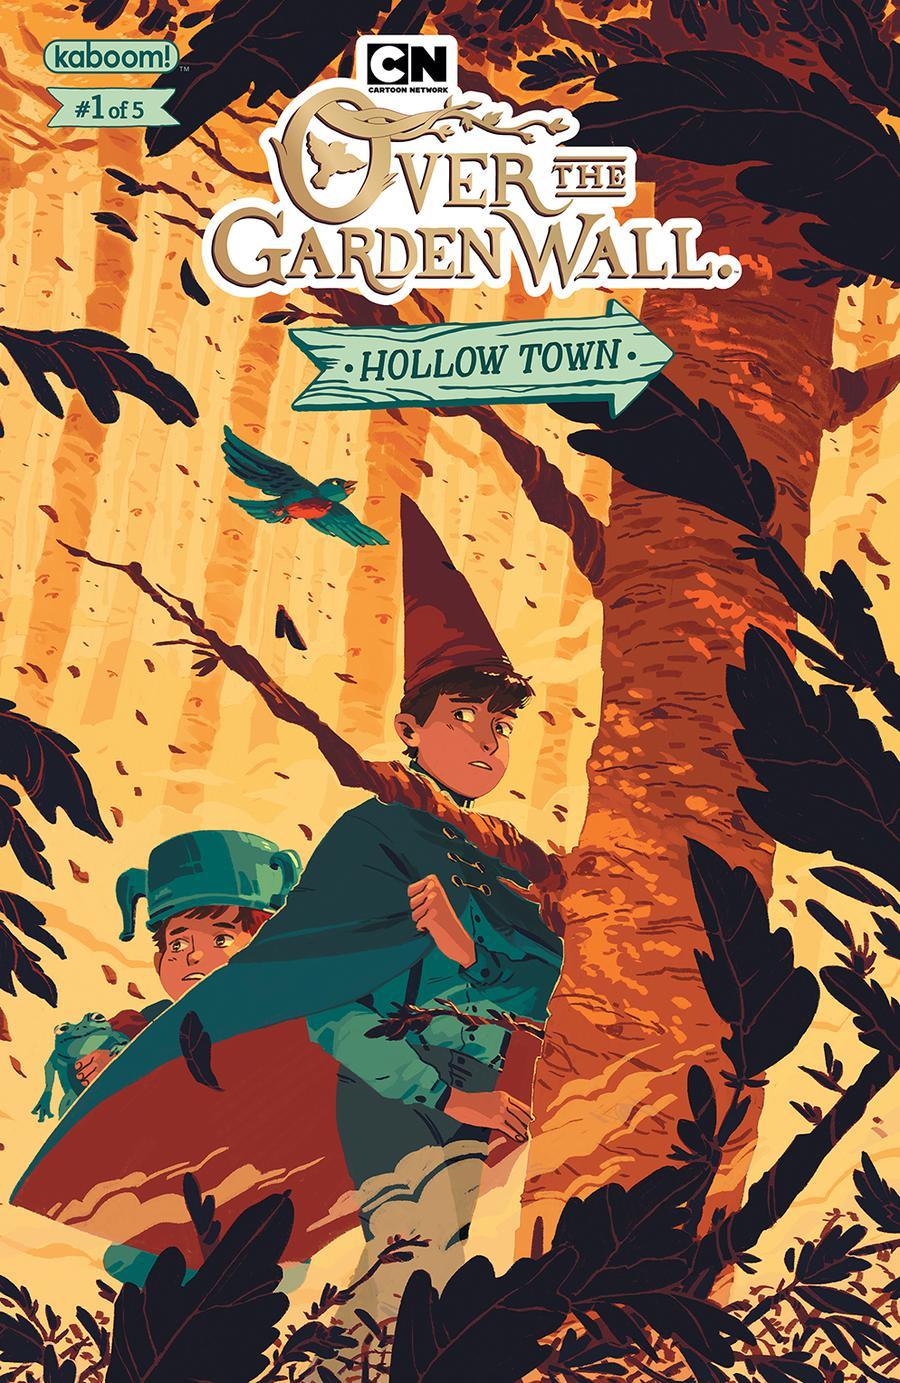 Over The Garden Wall Hollow Town Vol. 1 #1